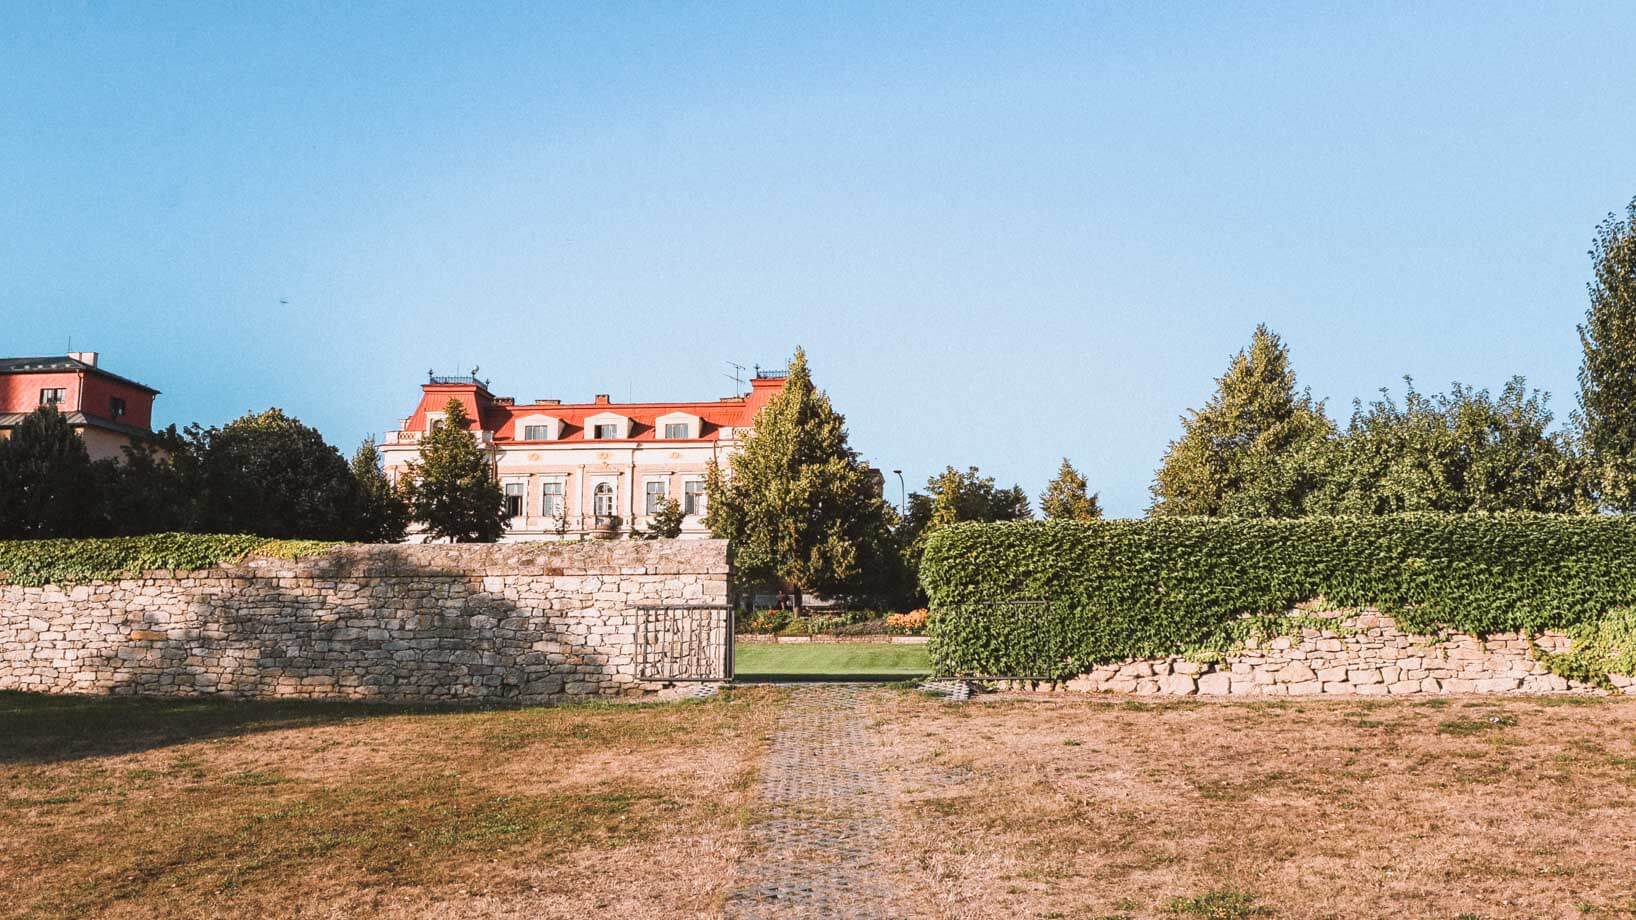 Monastery Garden Entrance - Visit Litomysl in Czechia - the New Paris for Bohemian Souls